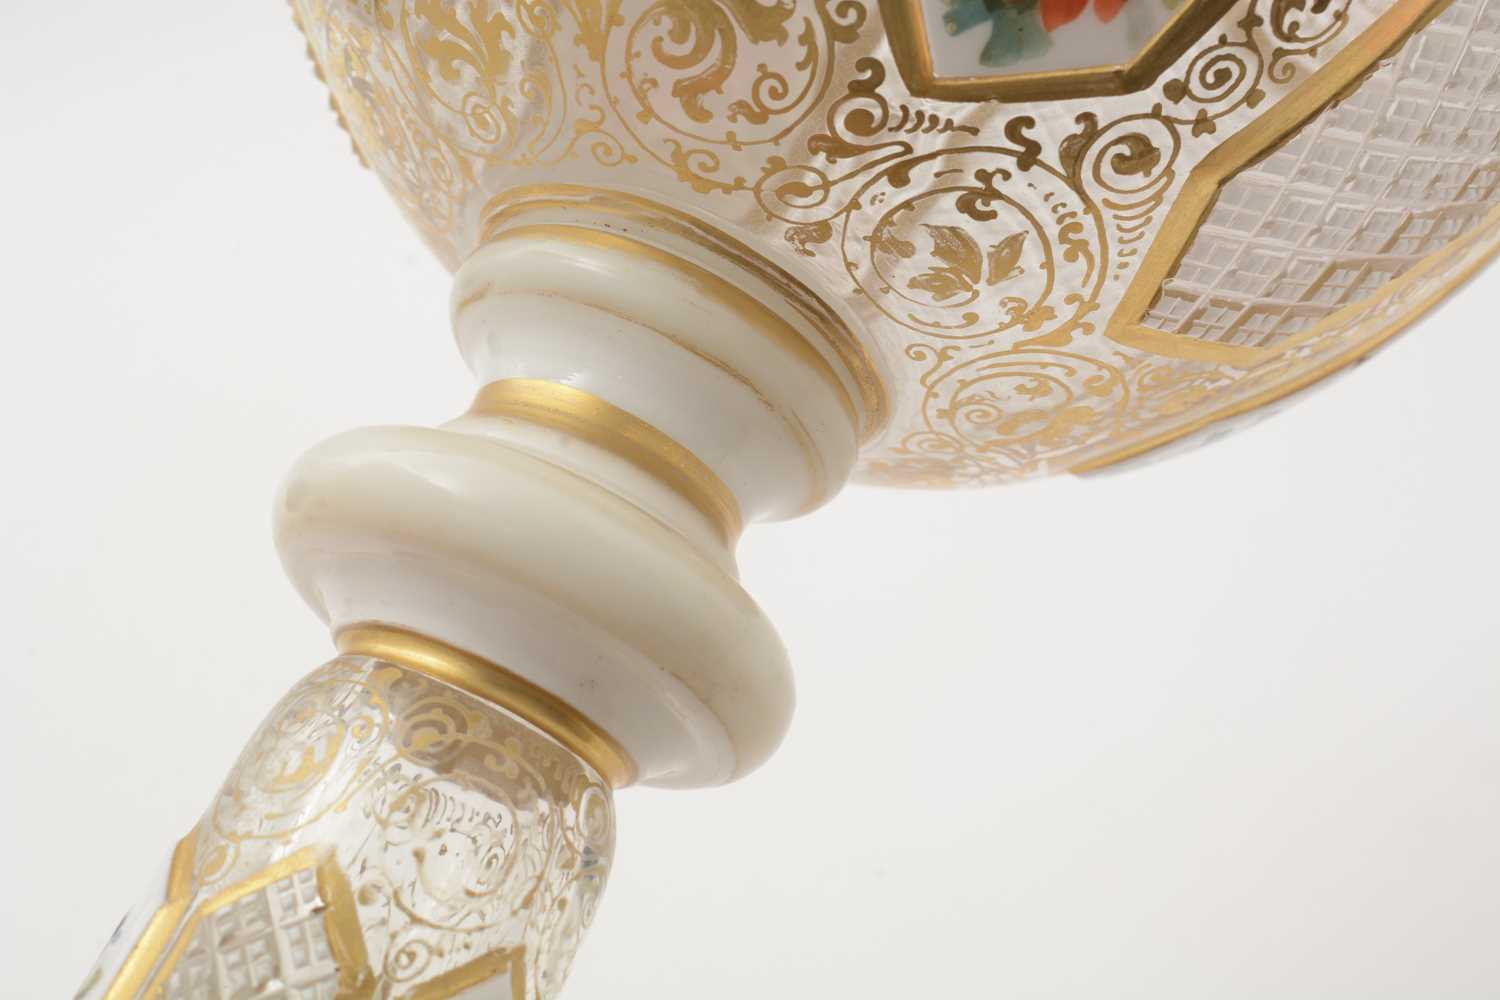 Bohemian overlay glass goblet - Image 15 of 16